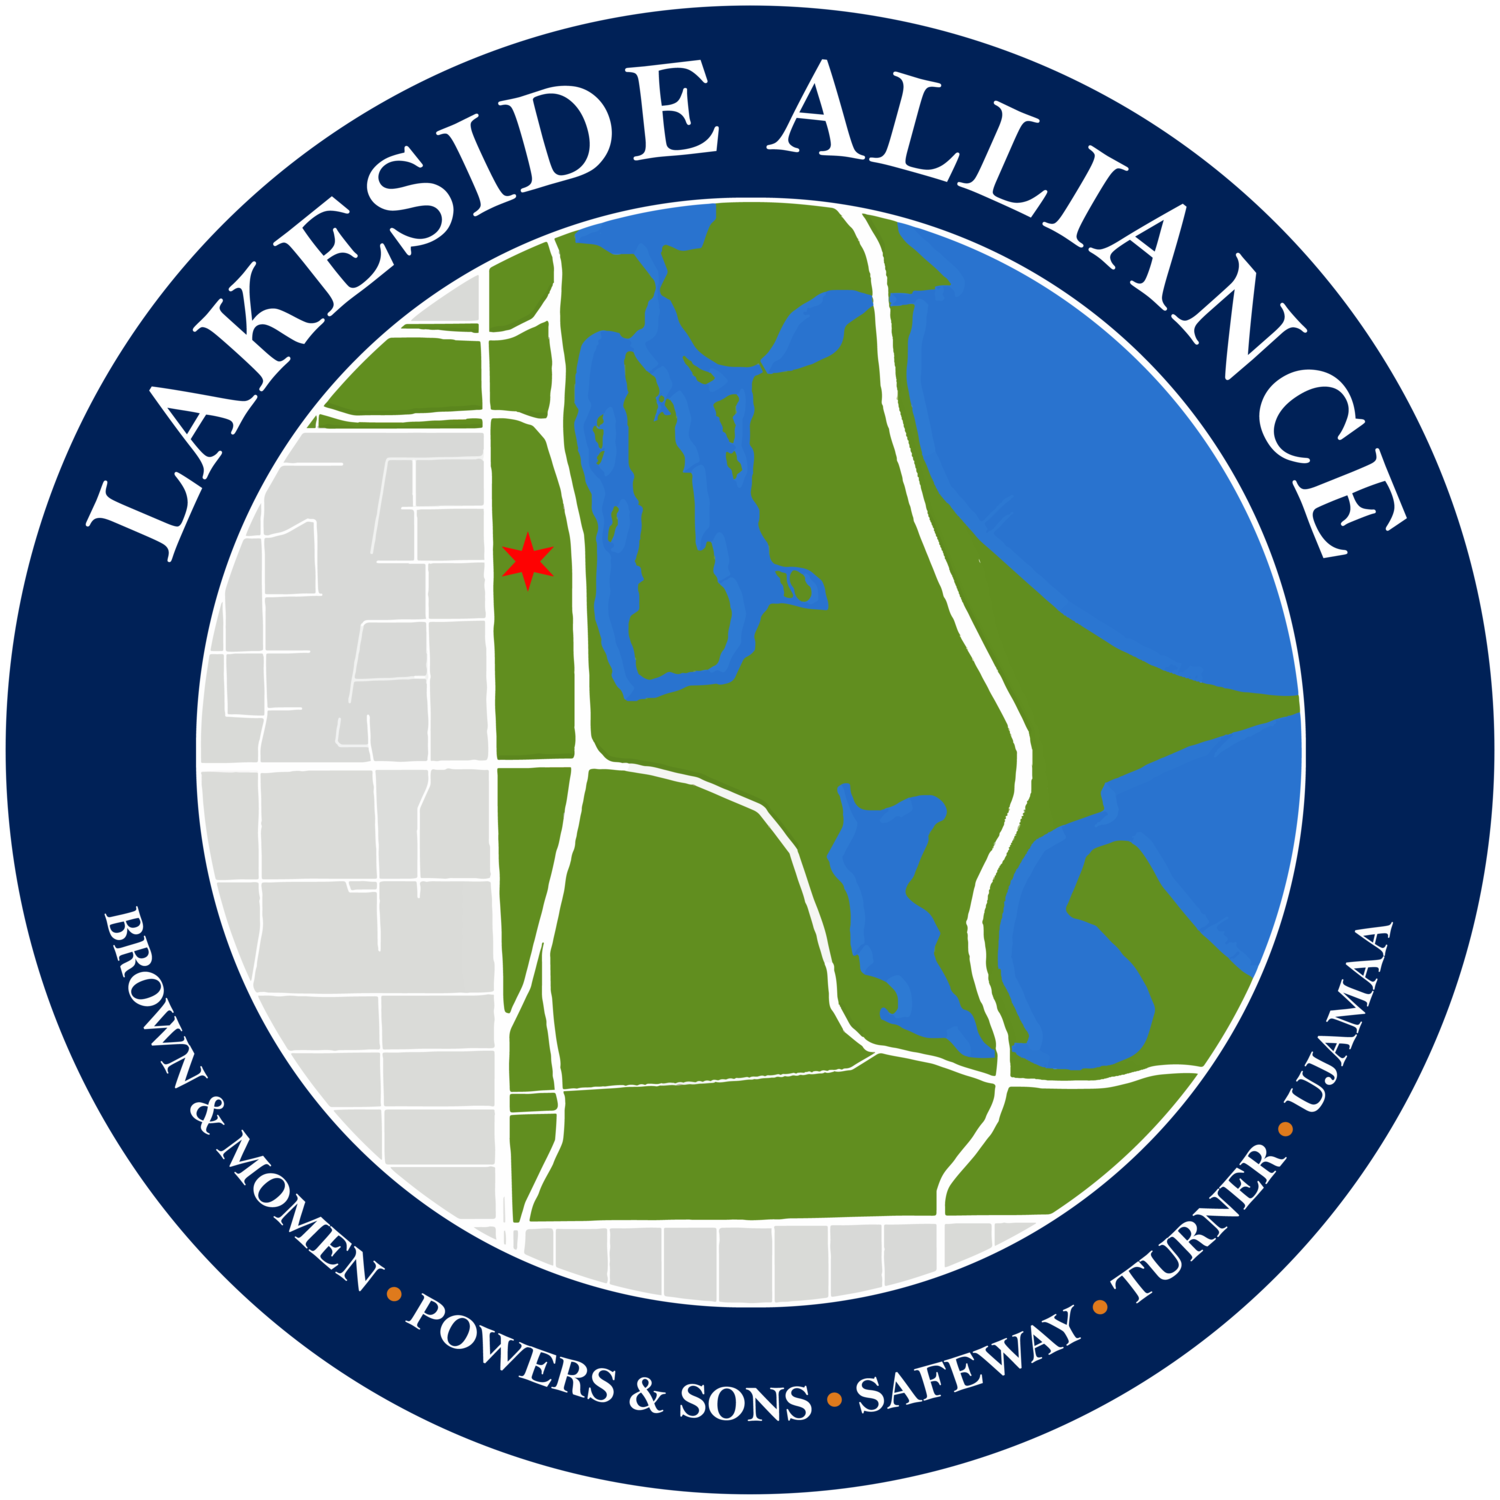 Lakeside Alliance